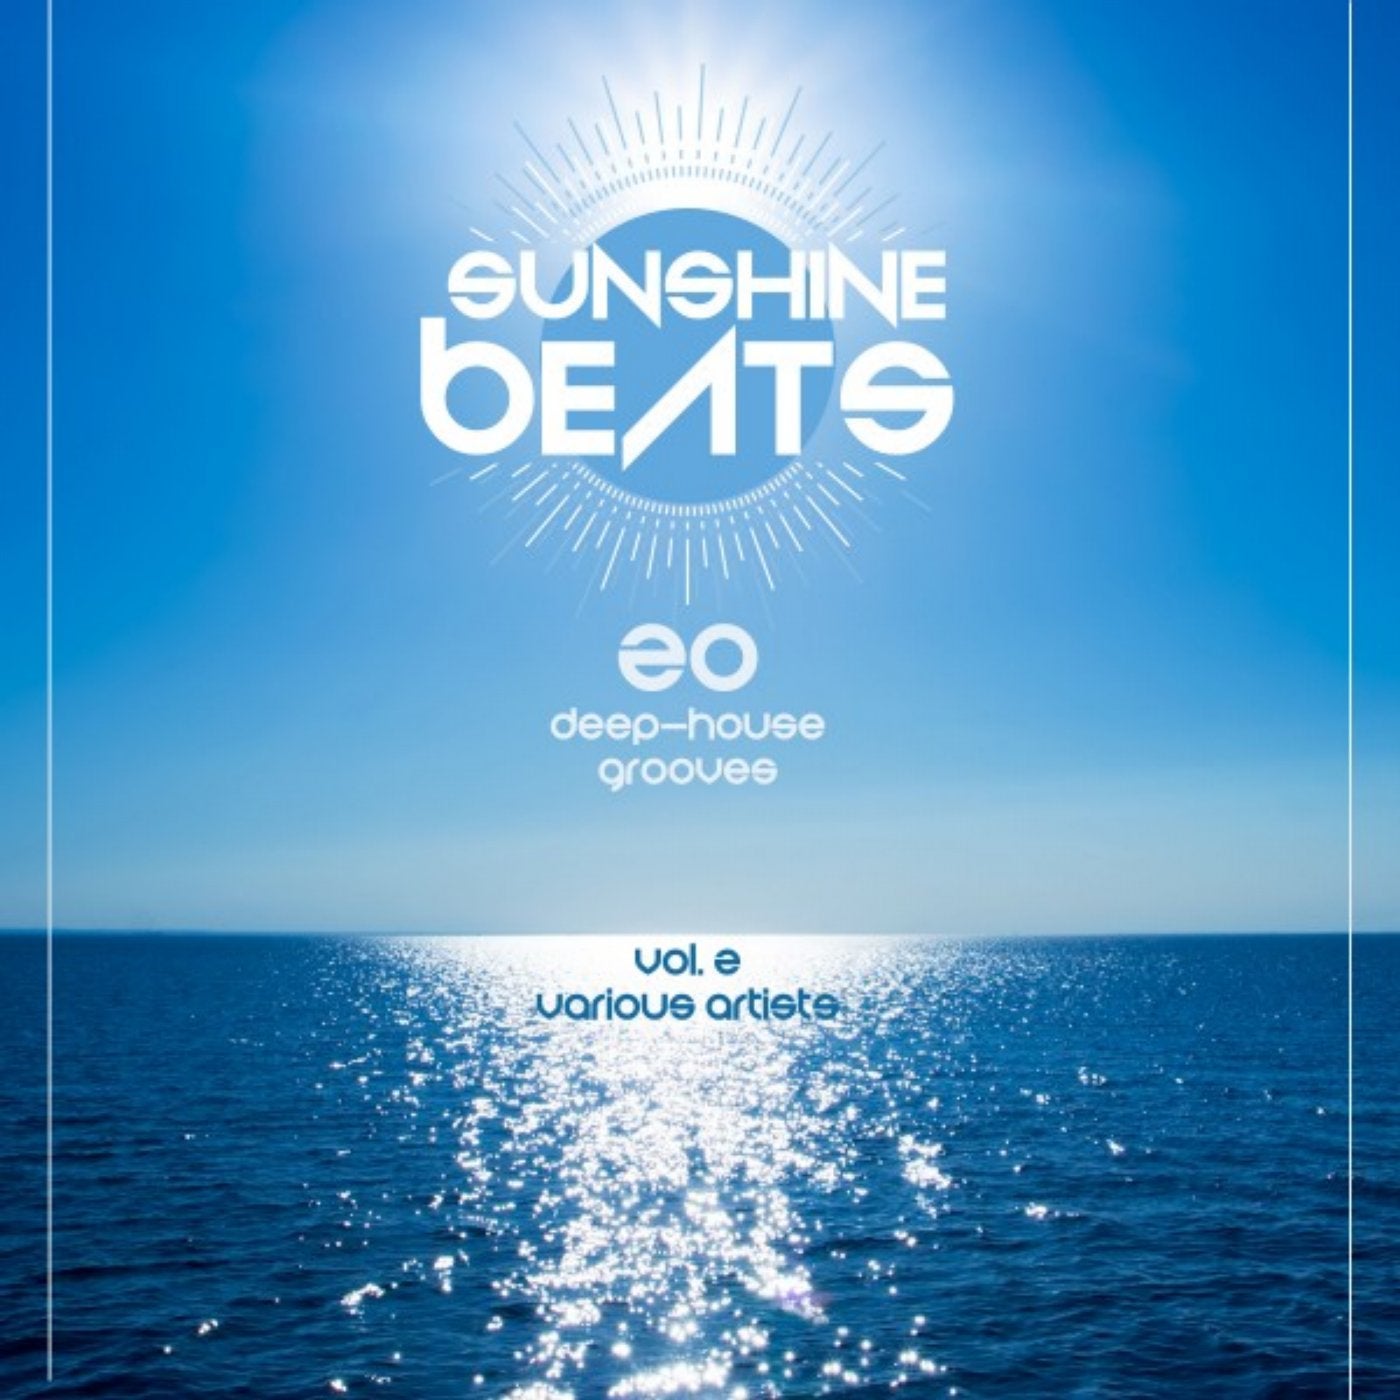 Sunshine Beats (20 Deep-House Grooves), Vol. 2